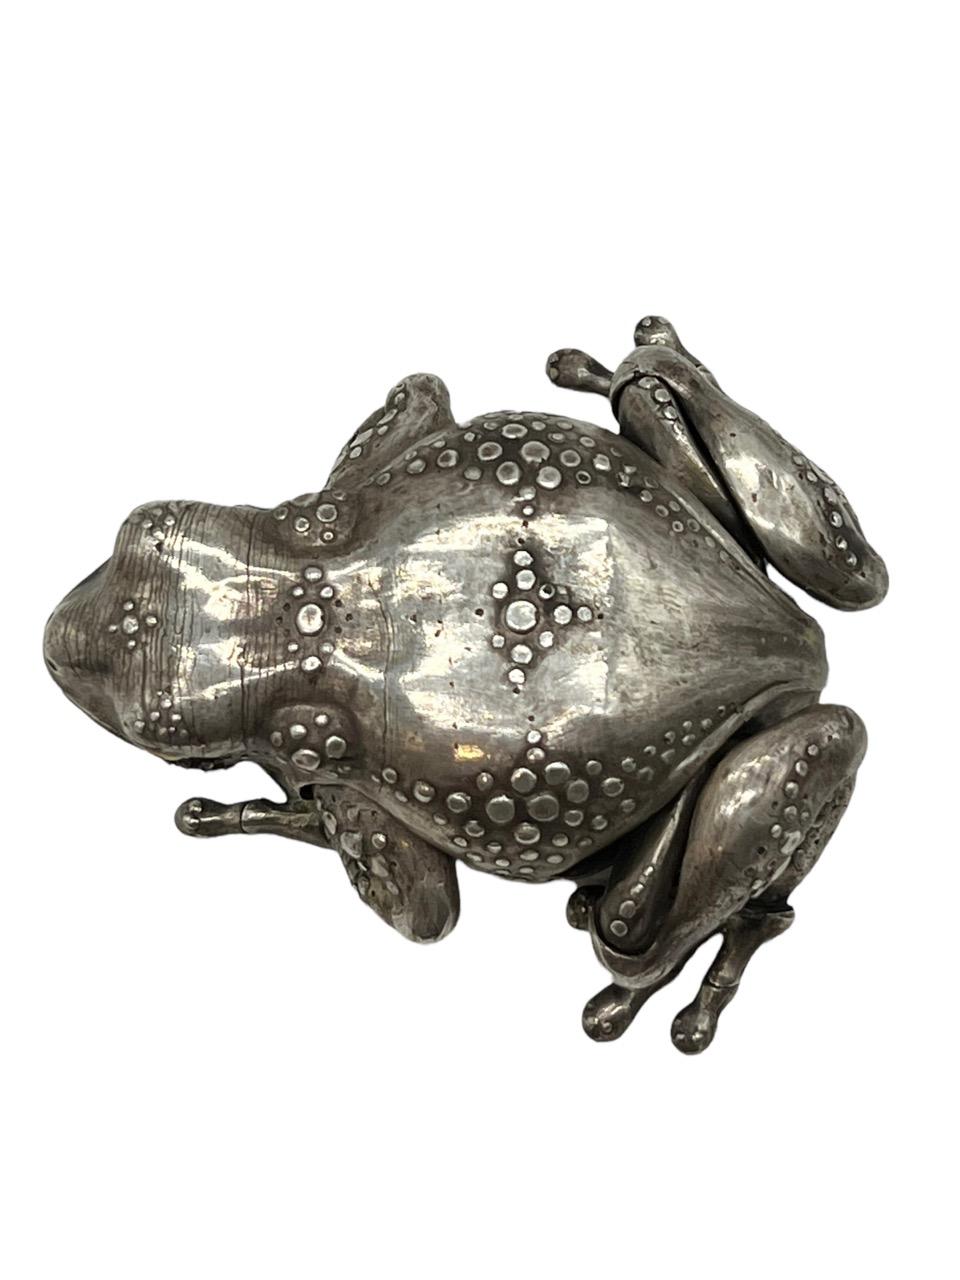 Oleg Konstantinov Fully Articulated Frog Made of Sterling Silver For Sale 5